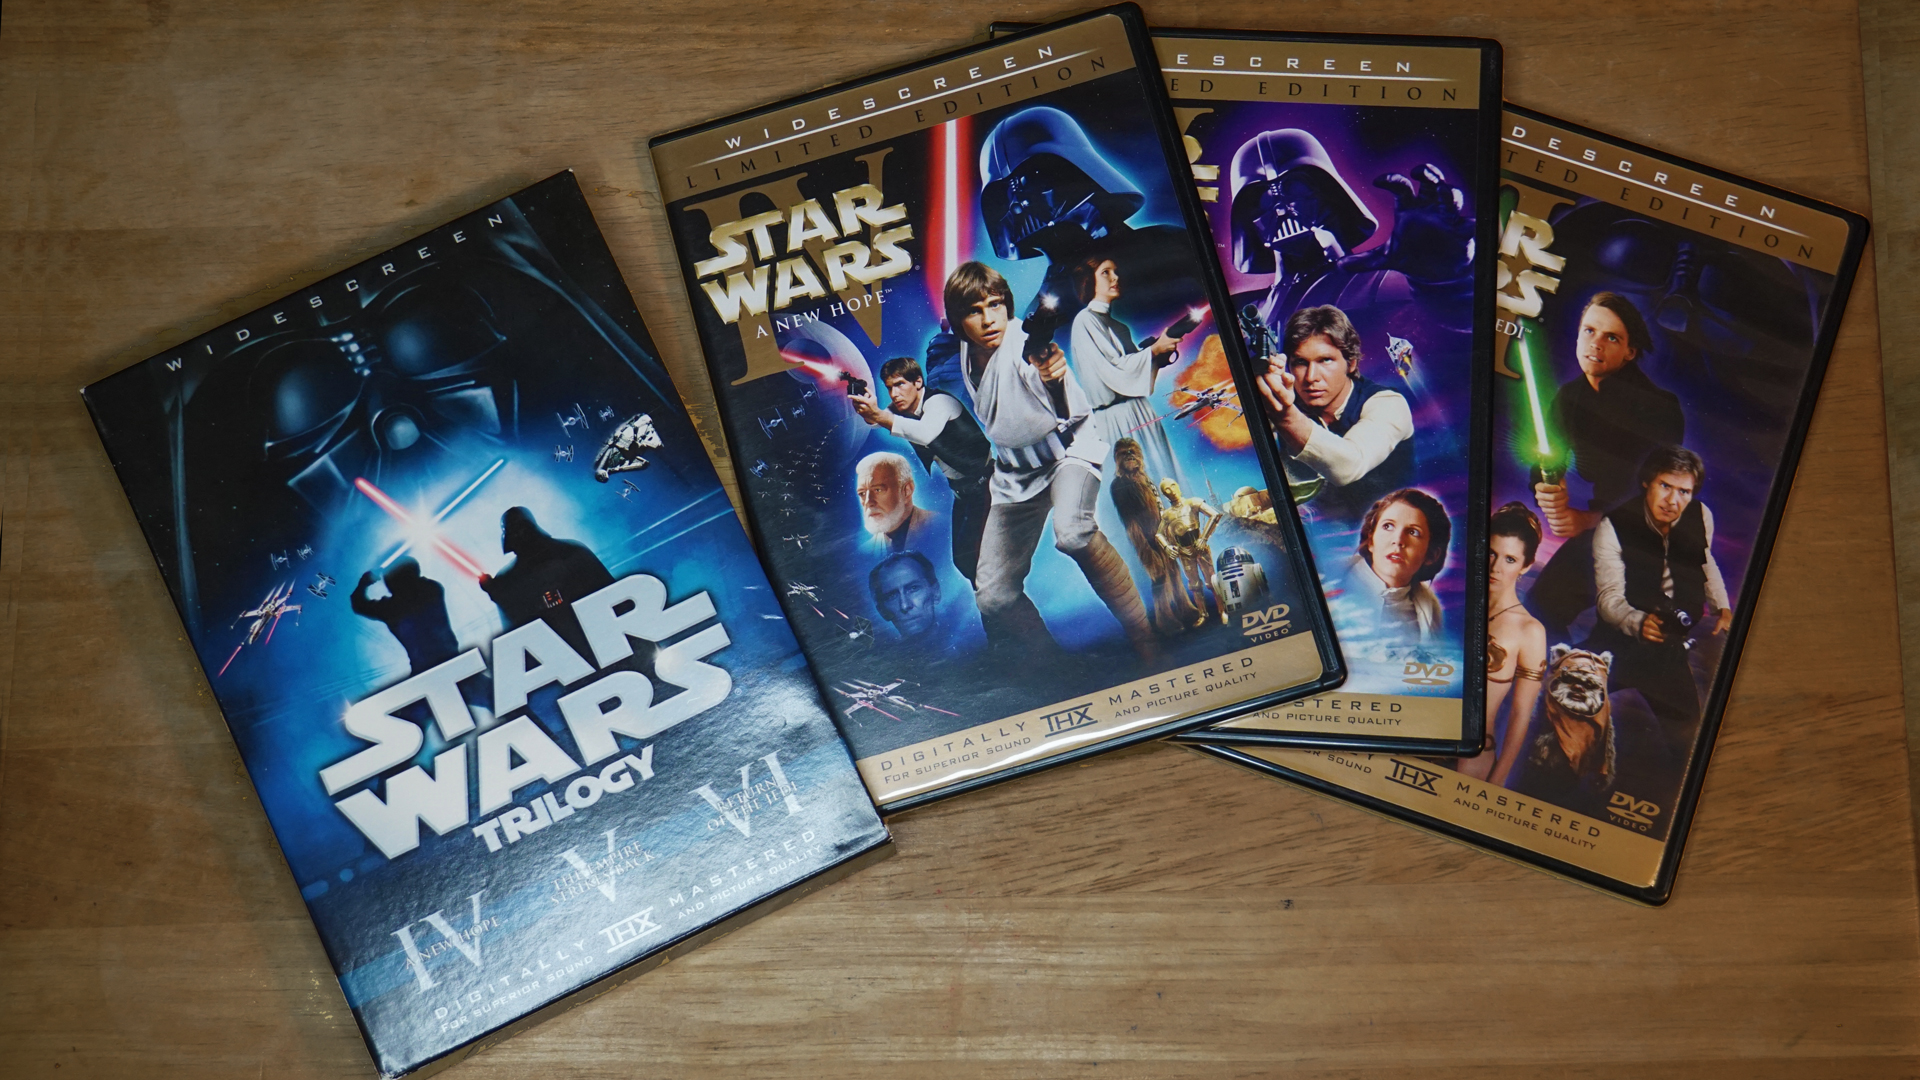 Star Wars DVD